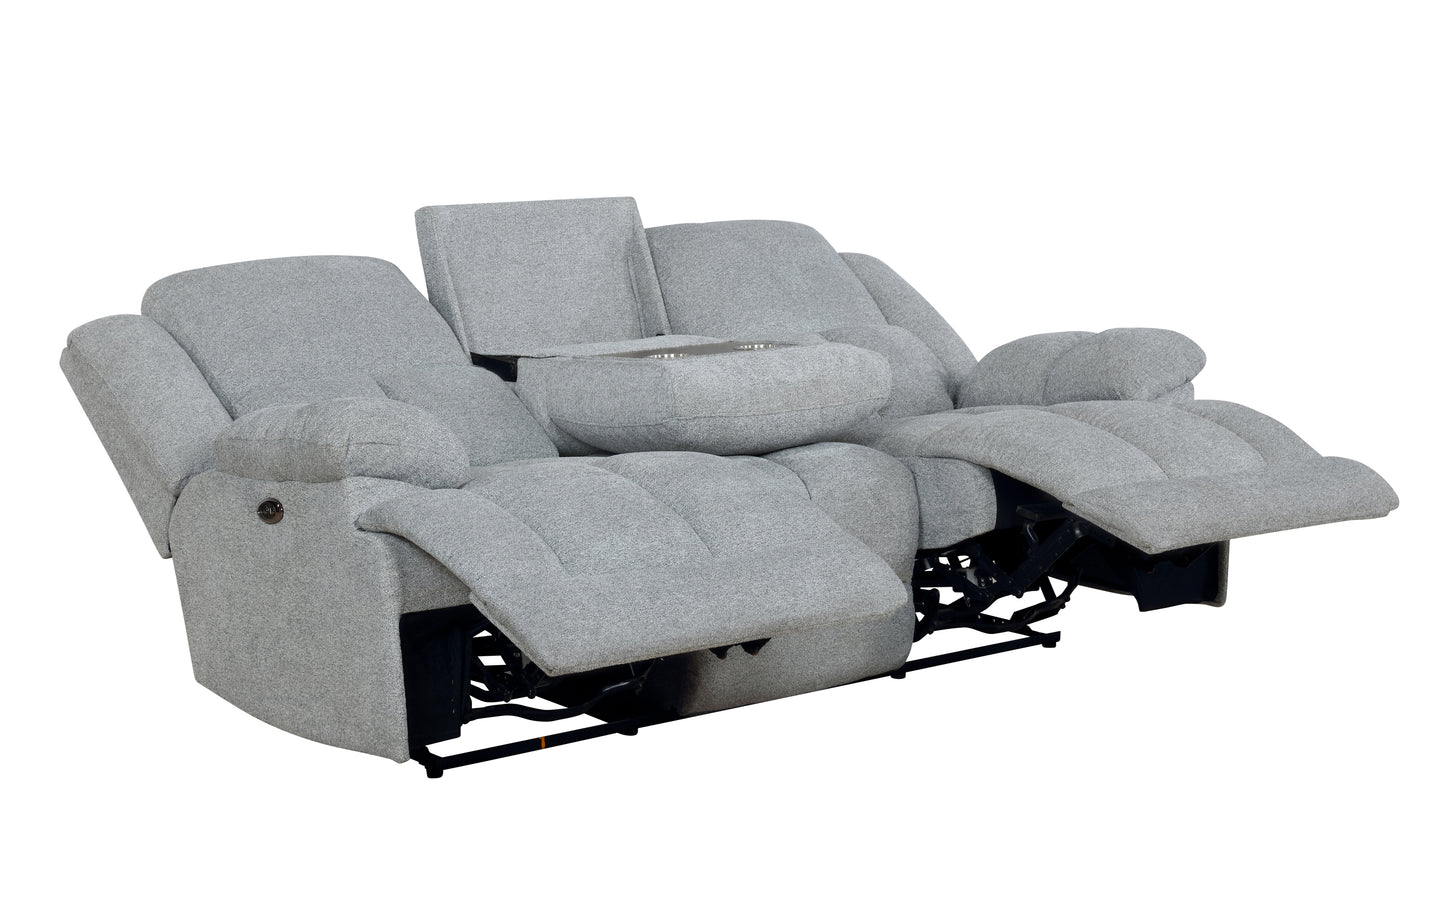 Waterbury Upholstered Power Sofa Grey